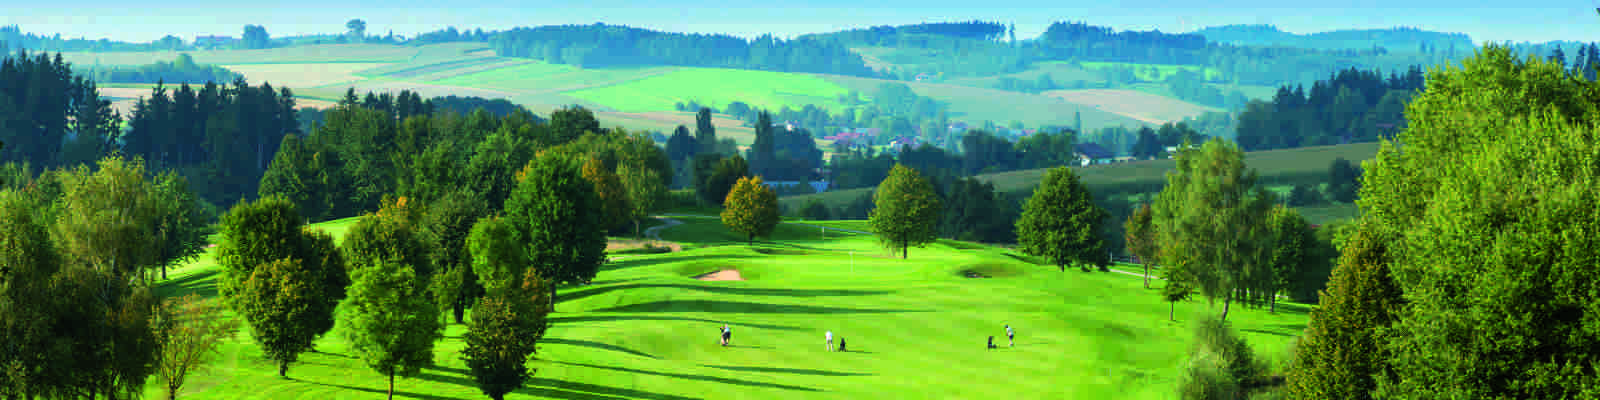 Golfplatz Brunnwies in Bad Griesbach (photo by Quellness & Golf Resort Bad Griesbach)